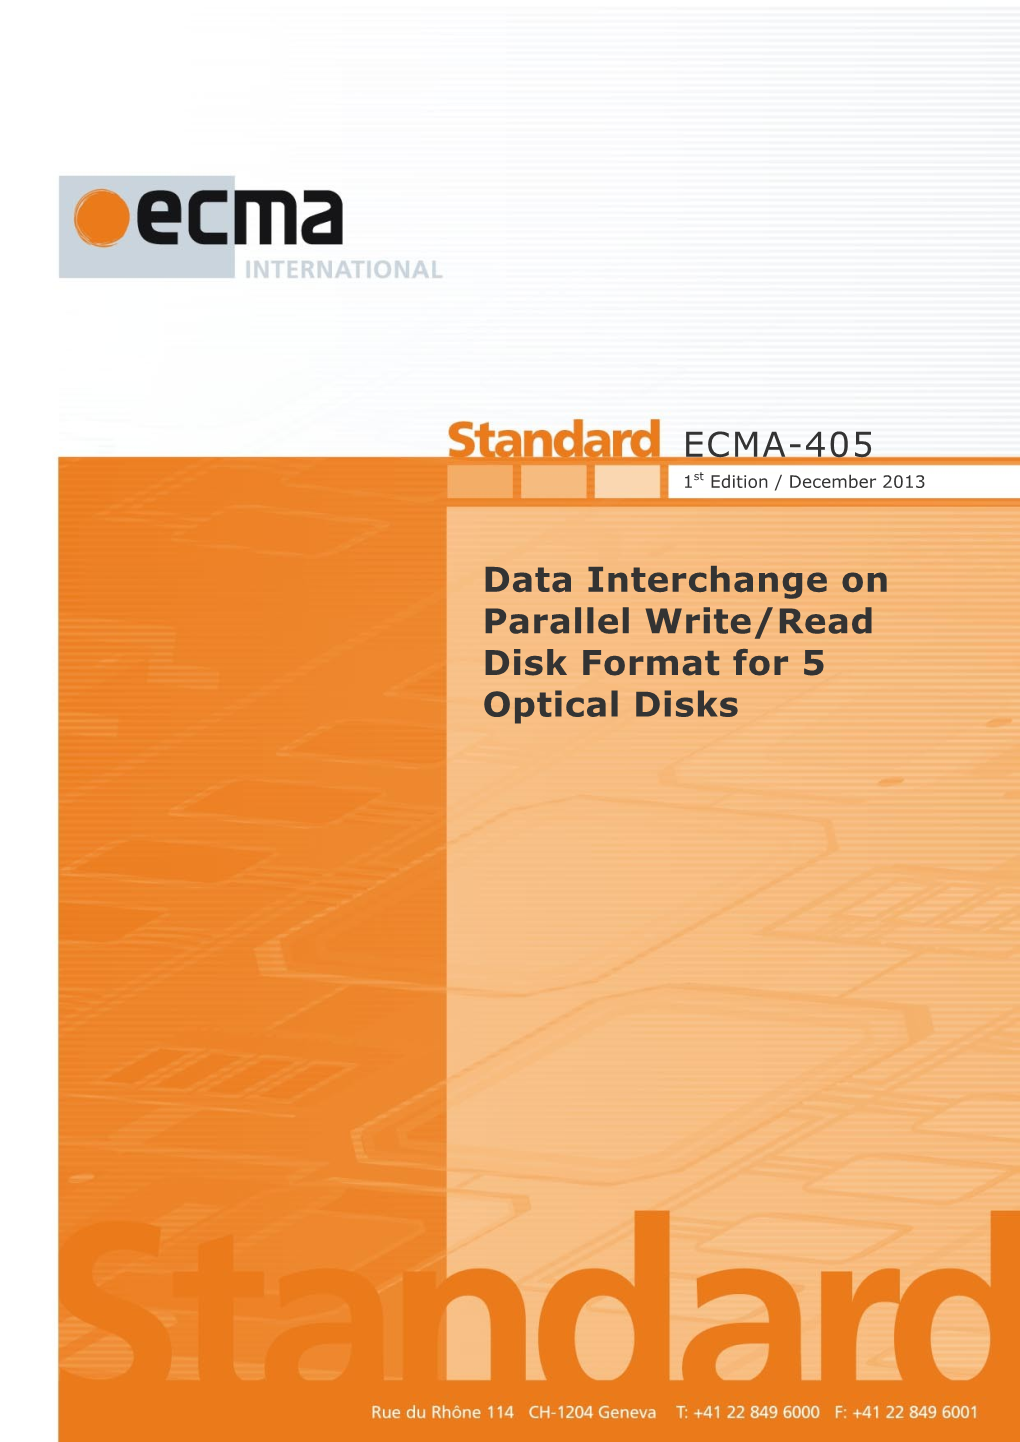 Data Interchange on Parallel Write/Read Disk Format for 5 Optical Disks